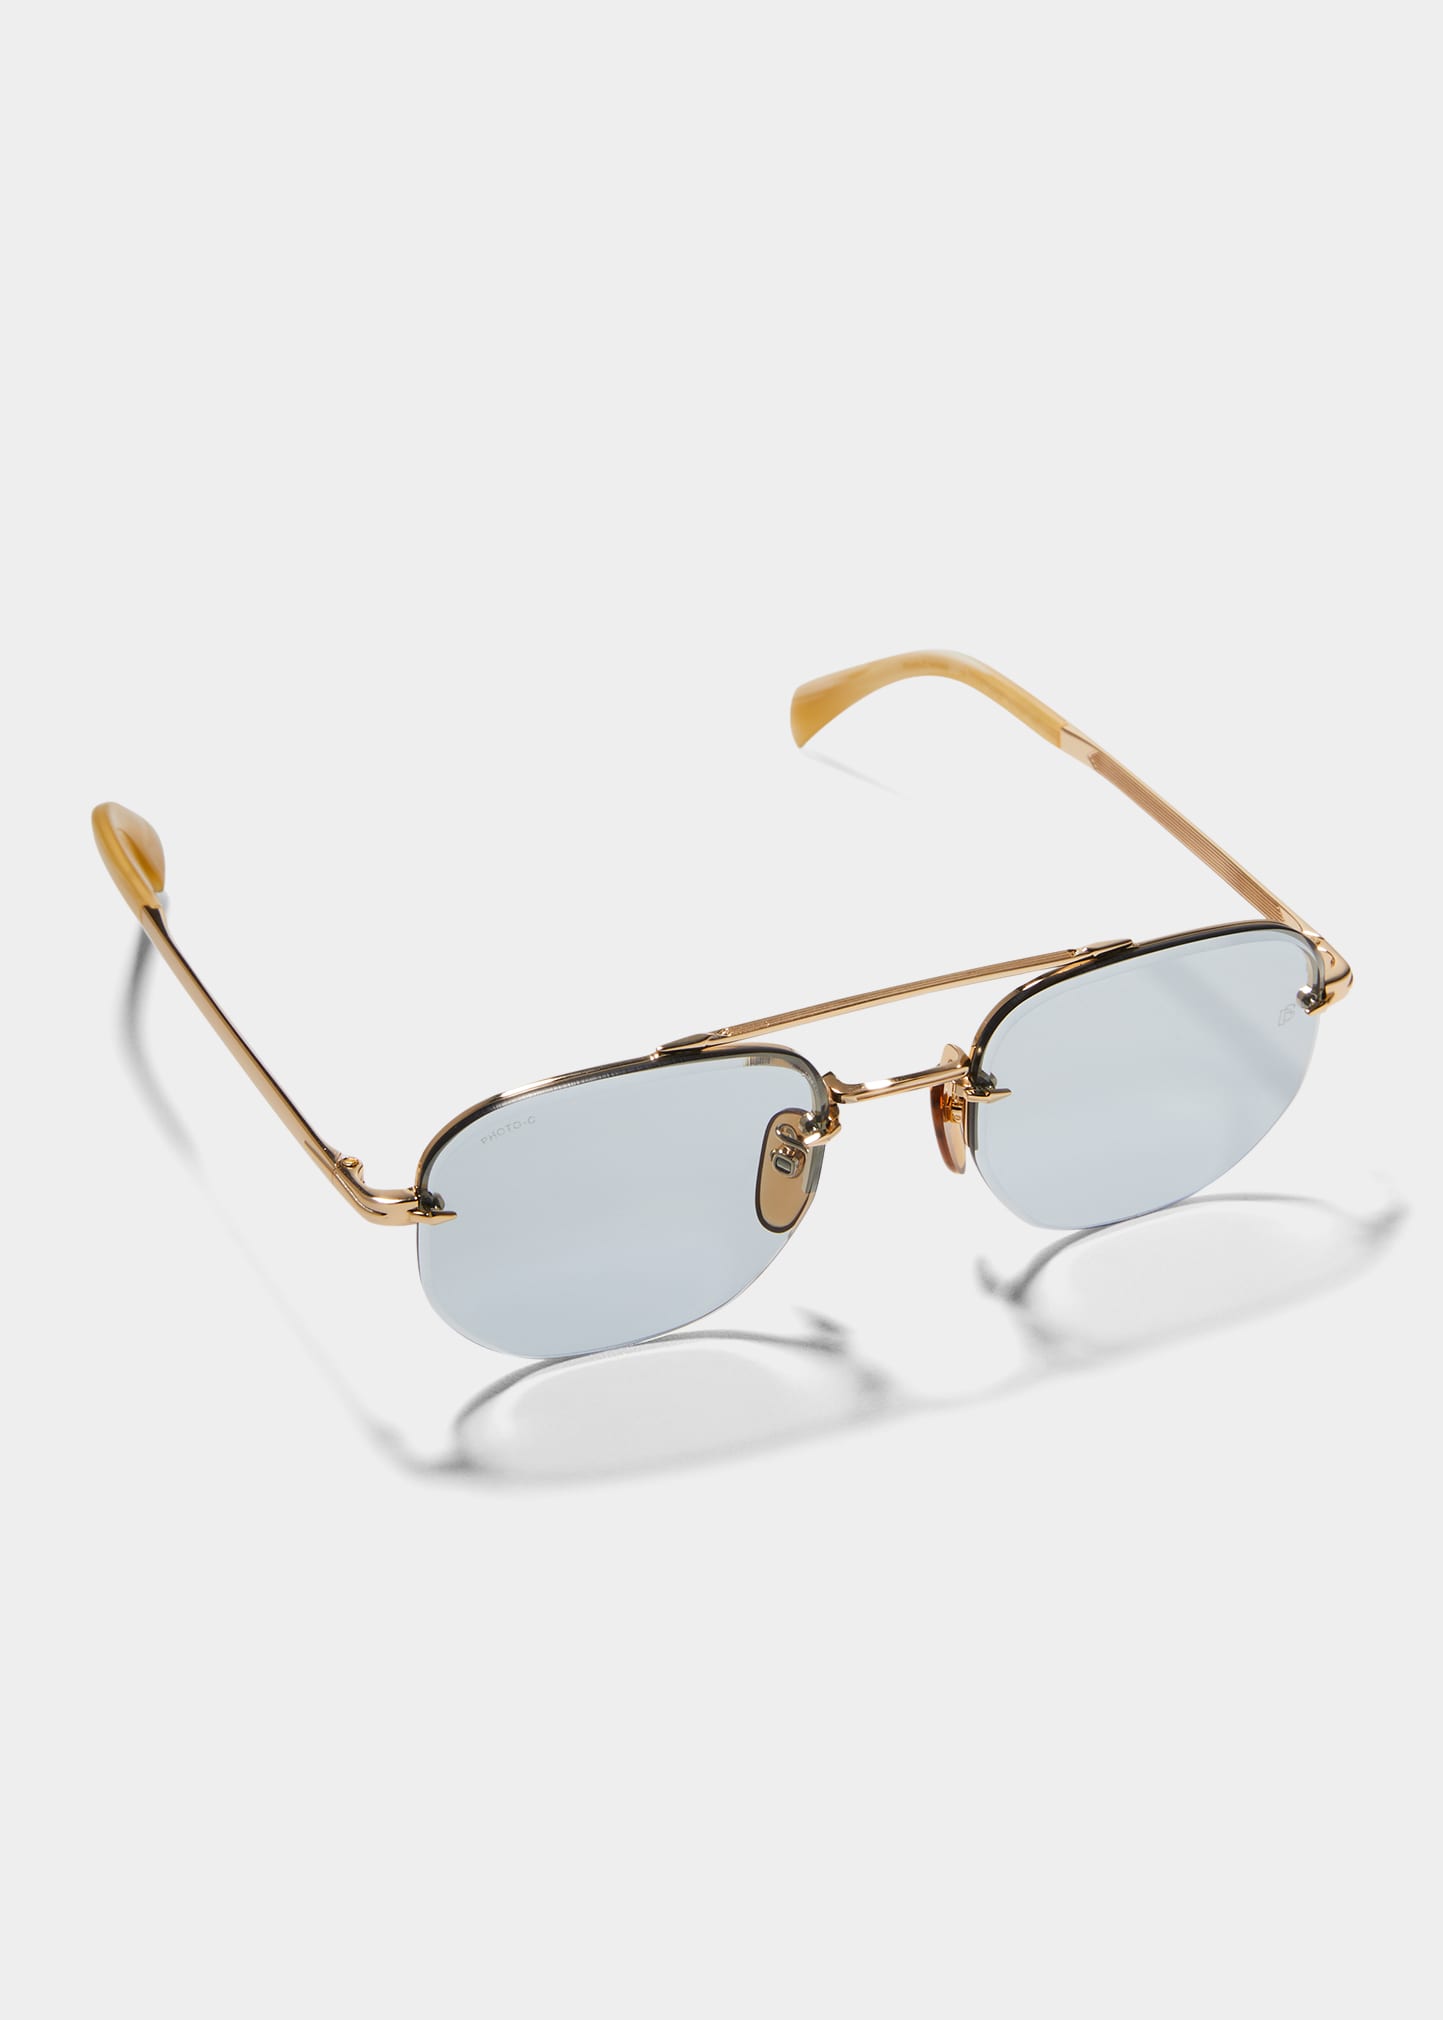 David Beckham Men's Photochromic Lens Square Sunglasses